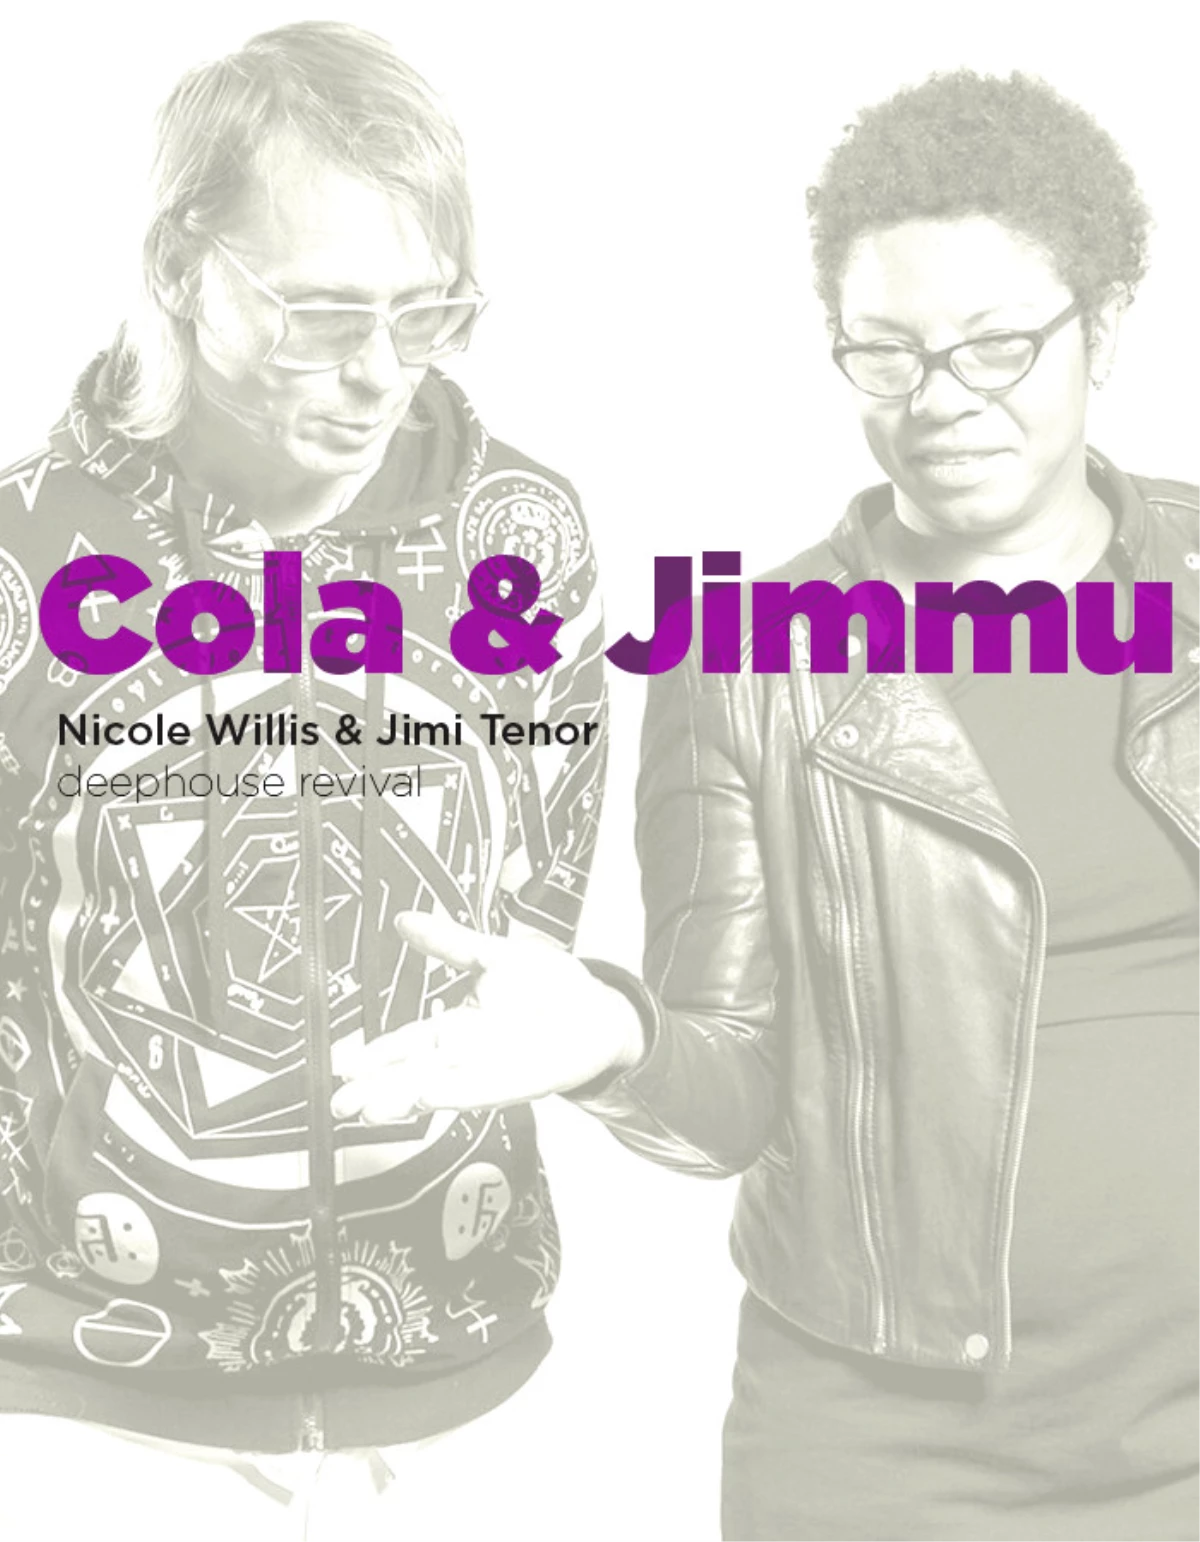 Cola & Jimmu (Nicole Willis & Jimi Tenor) - Deephouse Revival